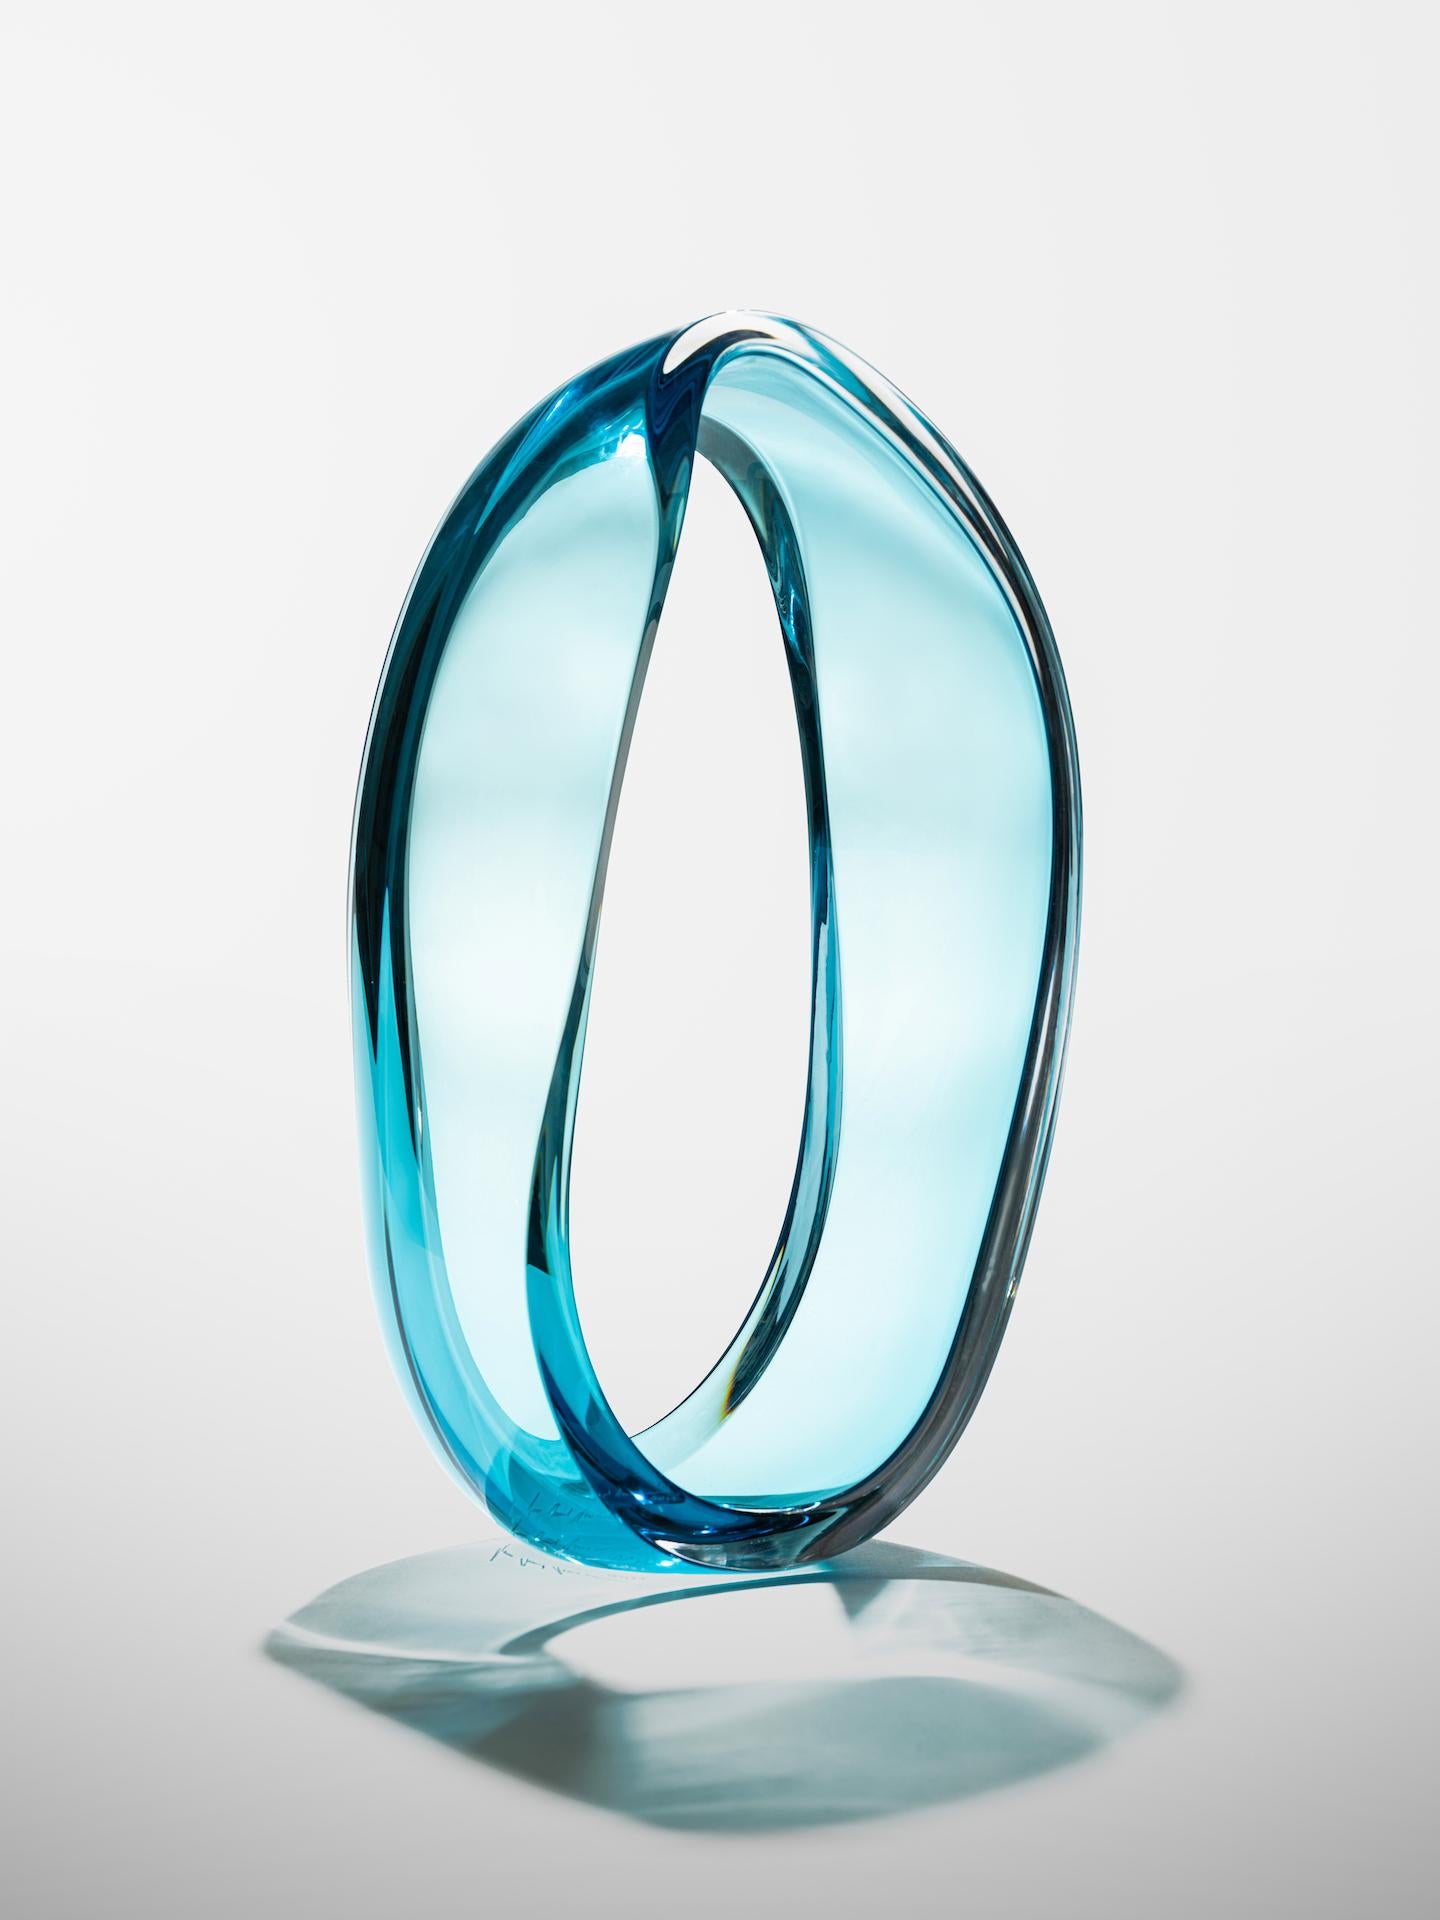 Jonas Noël Niedermann
LOOP (Azure), 2022
Blown glass
13.50 x 7.50 x 3.50 in.